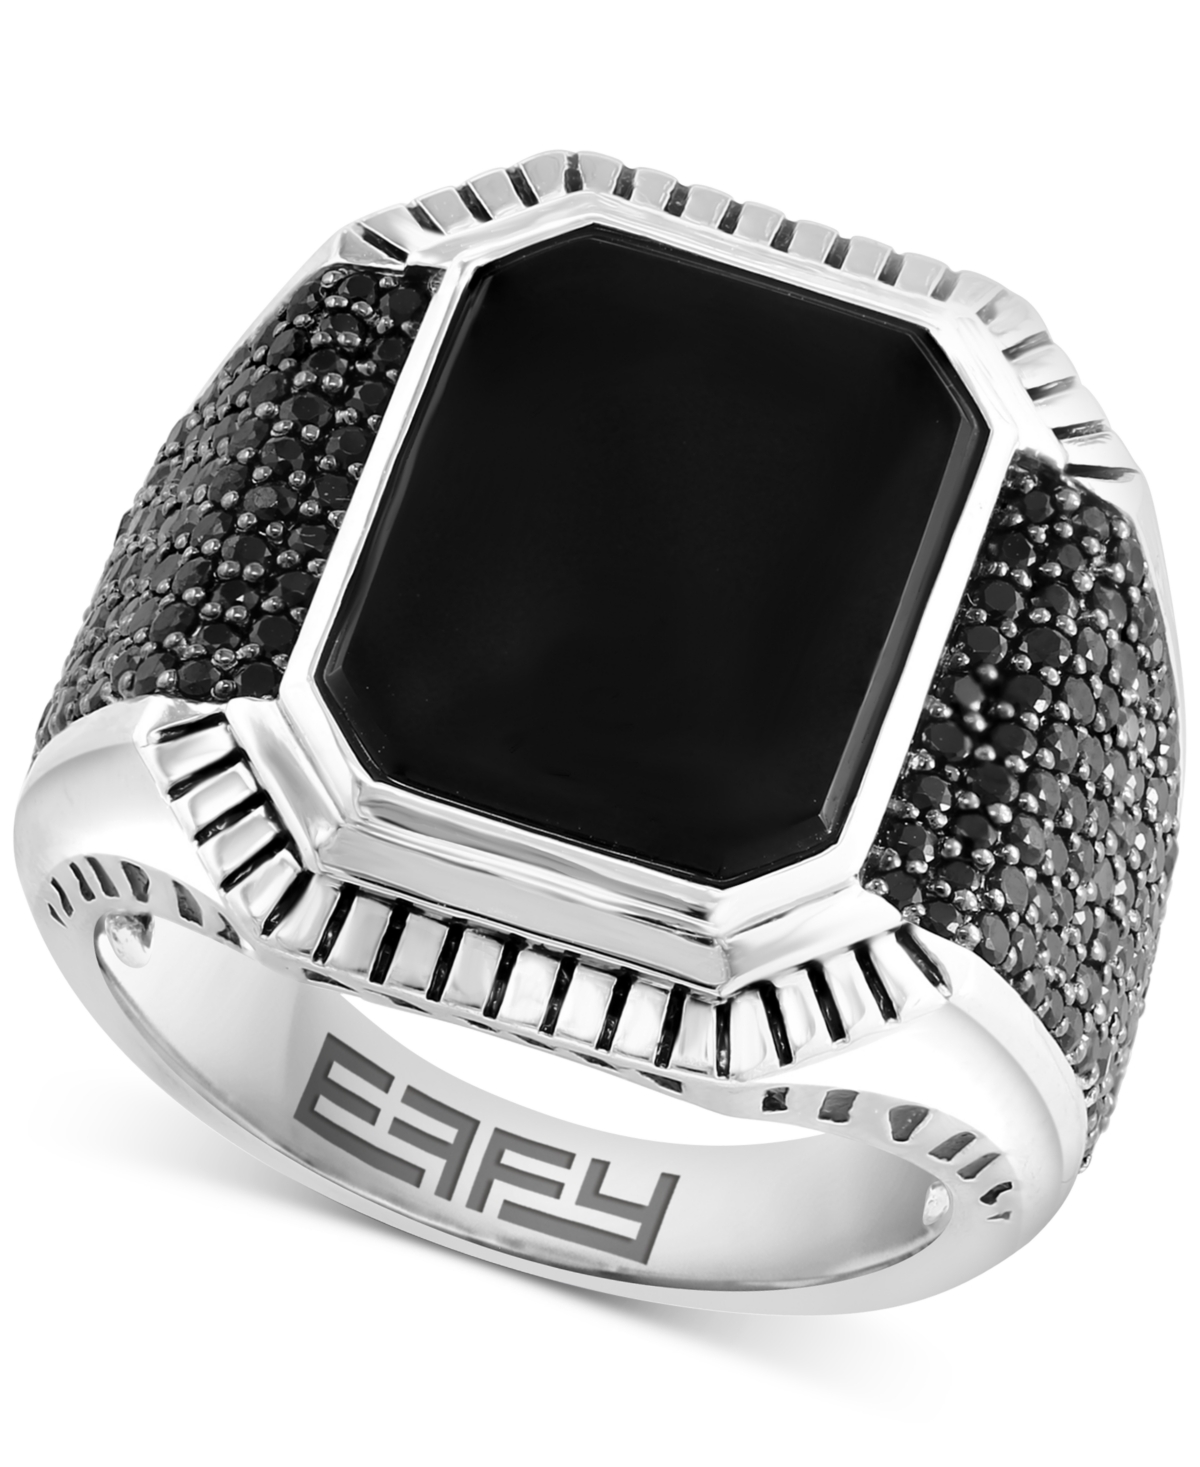 Effy Men's Onyx & Black Spinel Statement Ring in Sterling Silver - Silver